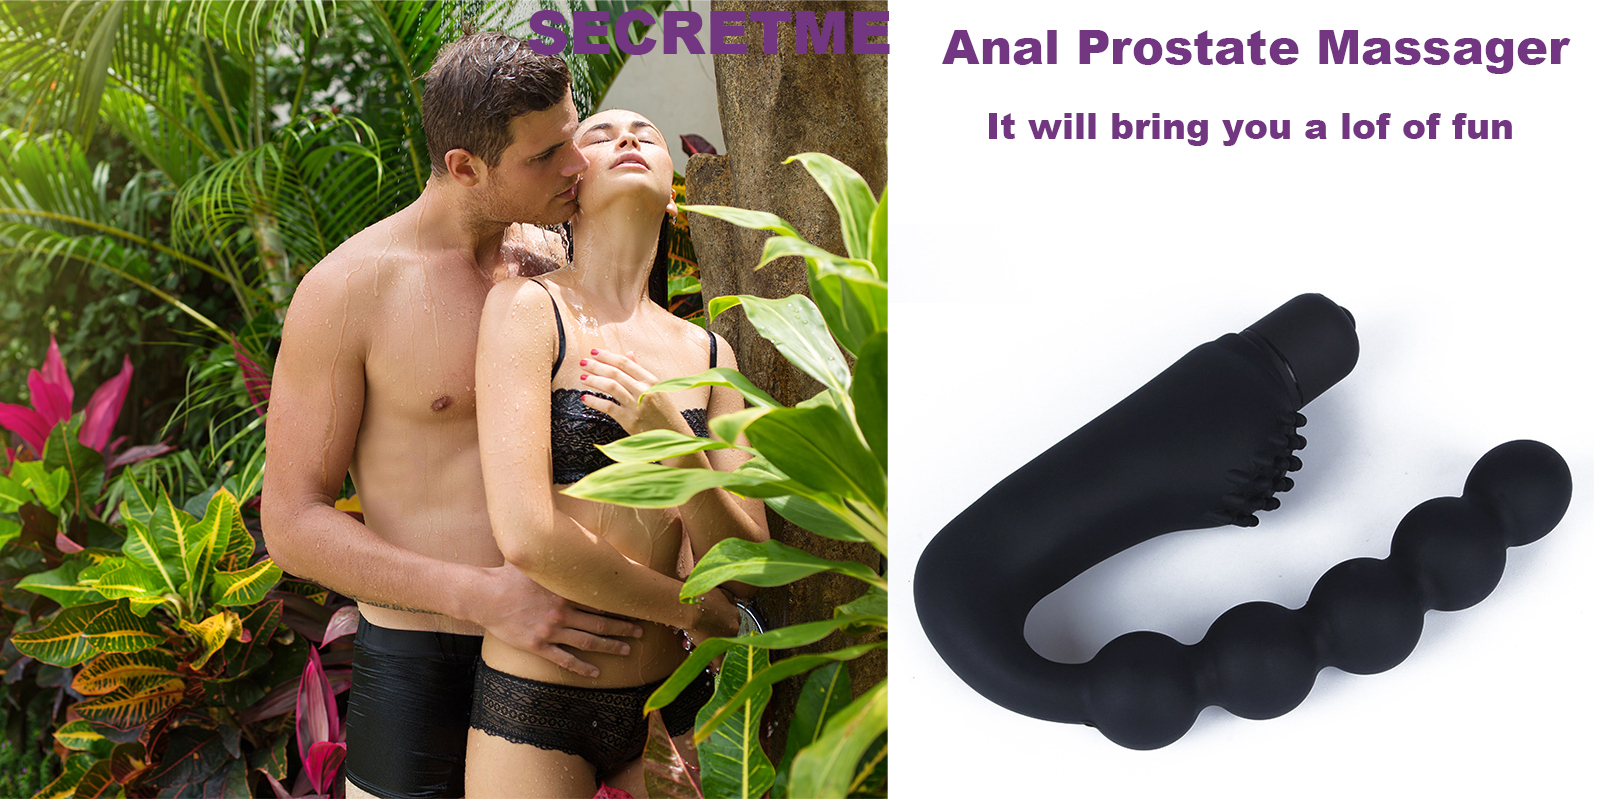 Anal prostat massaagerçysy